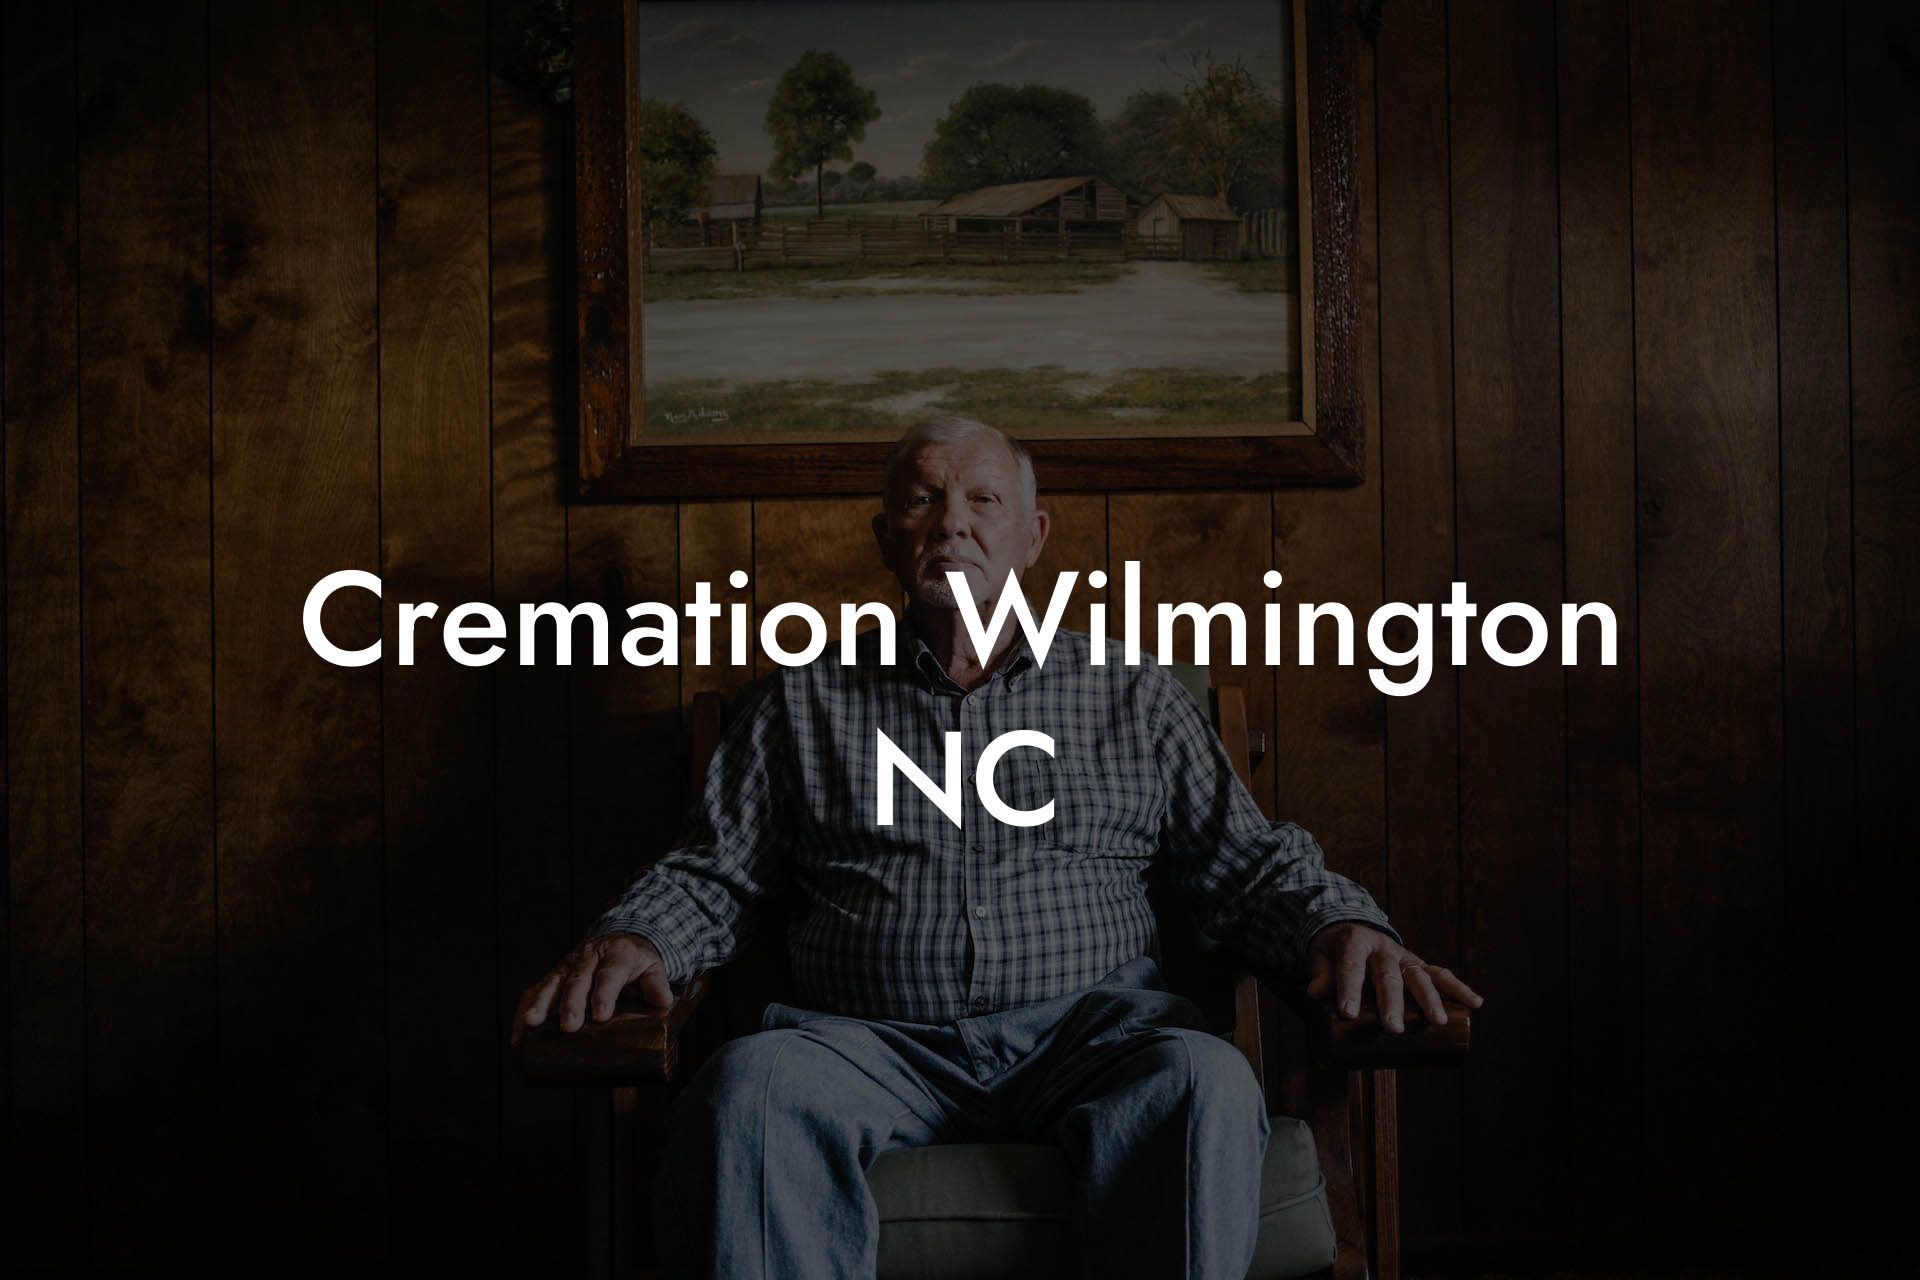 Cremation Wilmington NC